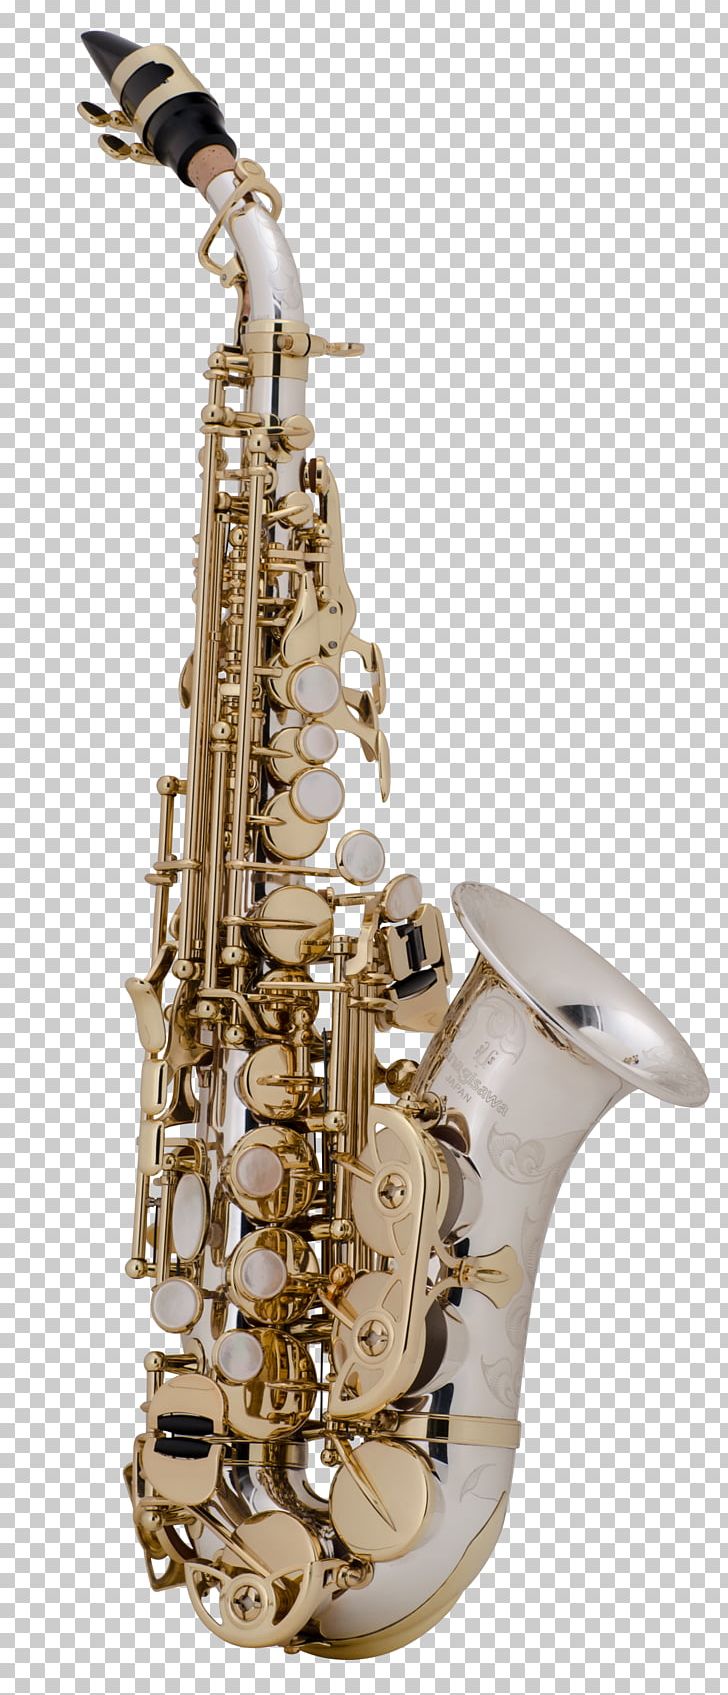 Baritone Saxophone Musical Instruments Woodwind Instrument Brass Instruments PNG, Clipart, Baritone Saxophone, Brass, Brass Instrument, Brass Instruments, Clarinet Free PNG Download